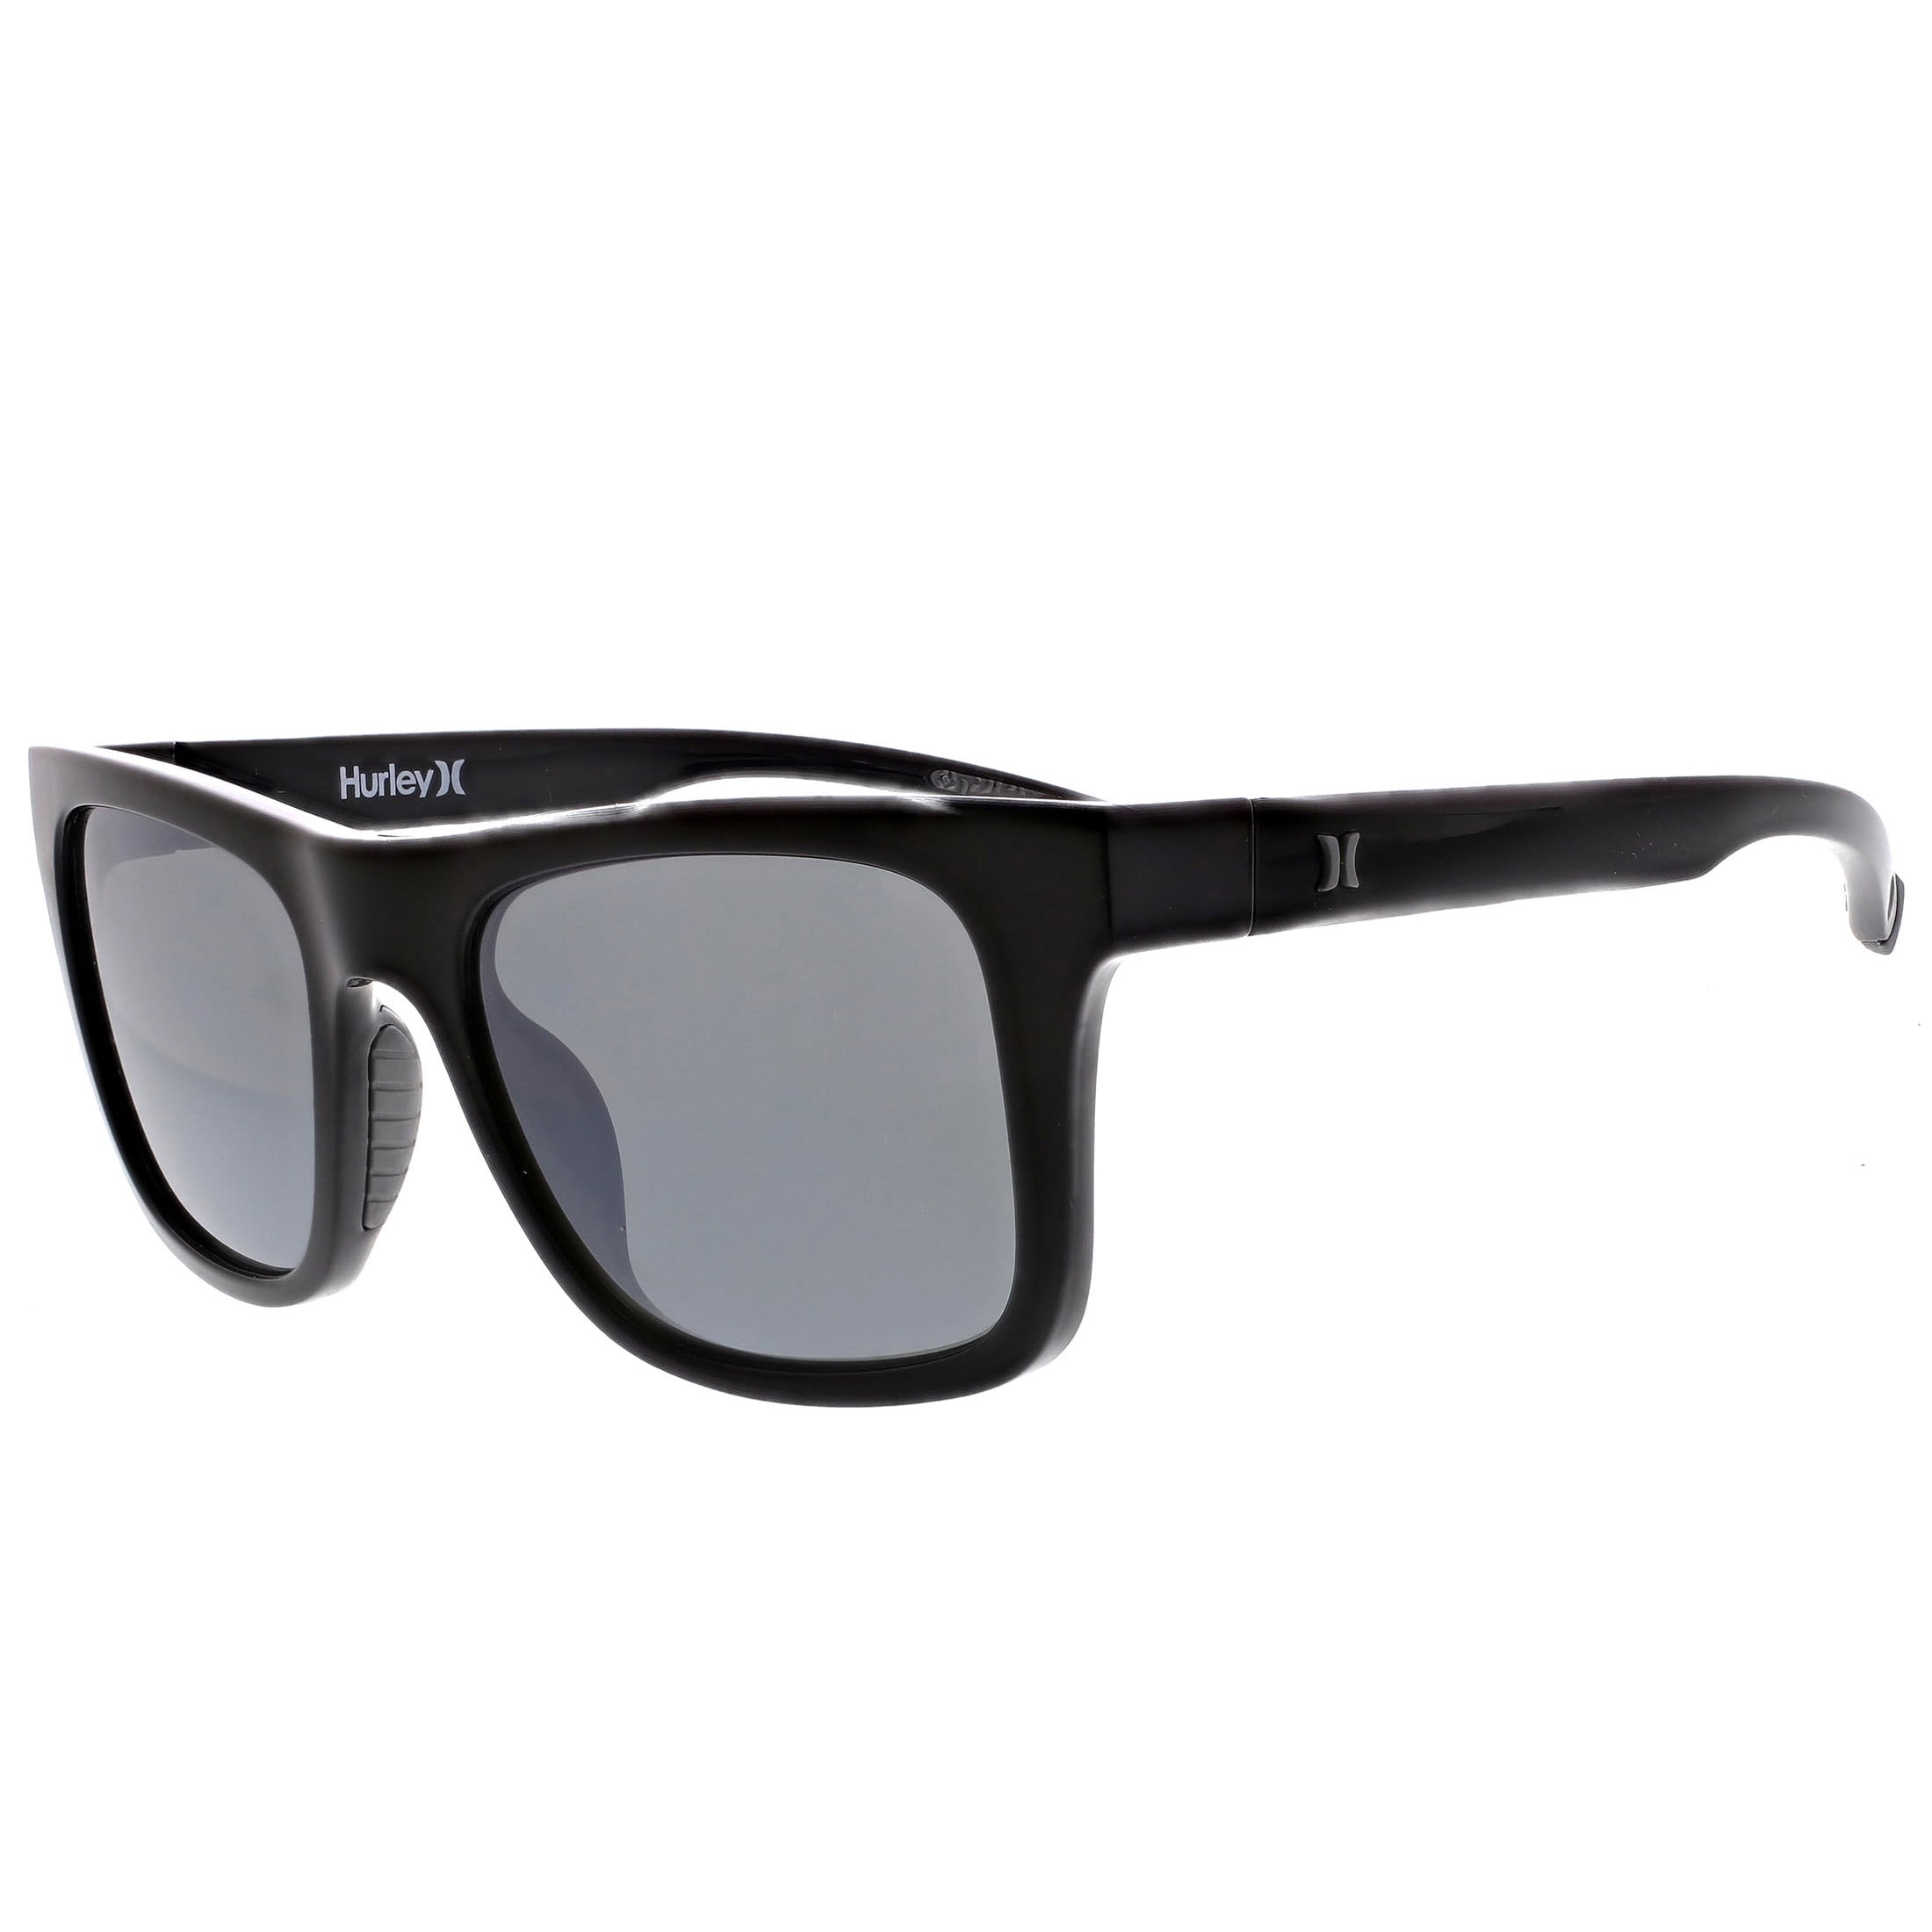 Hurley Men's Rx'able Sport Polarized Sunglasses, Hsm3000pxwm Sunrise, Black, 53-20-140, with Case